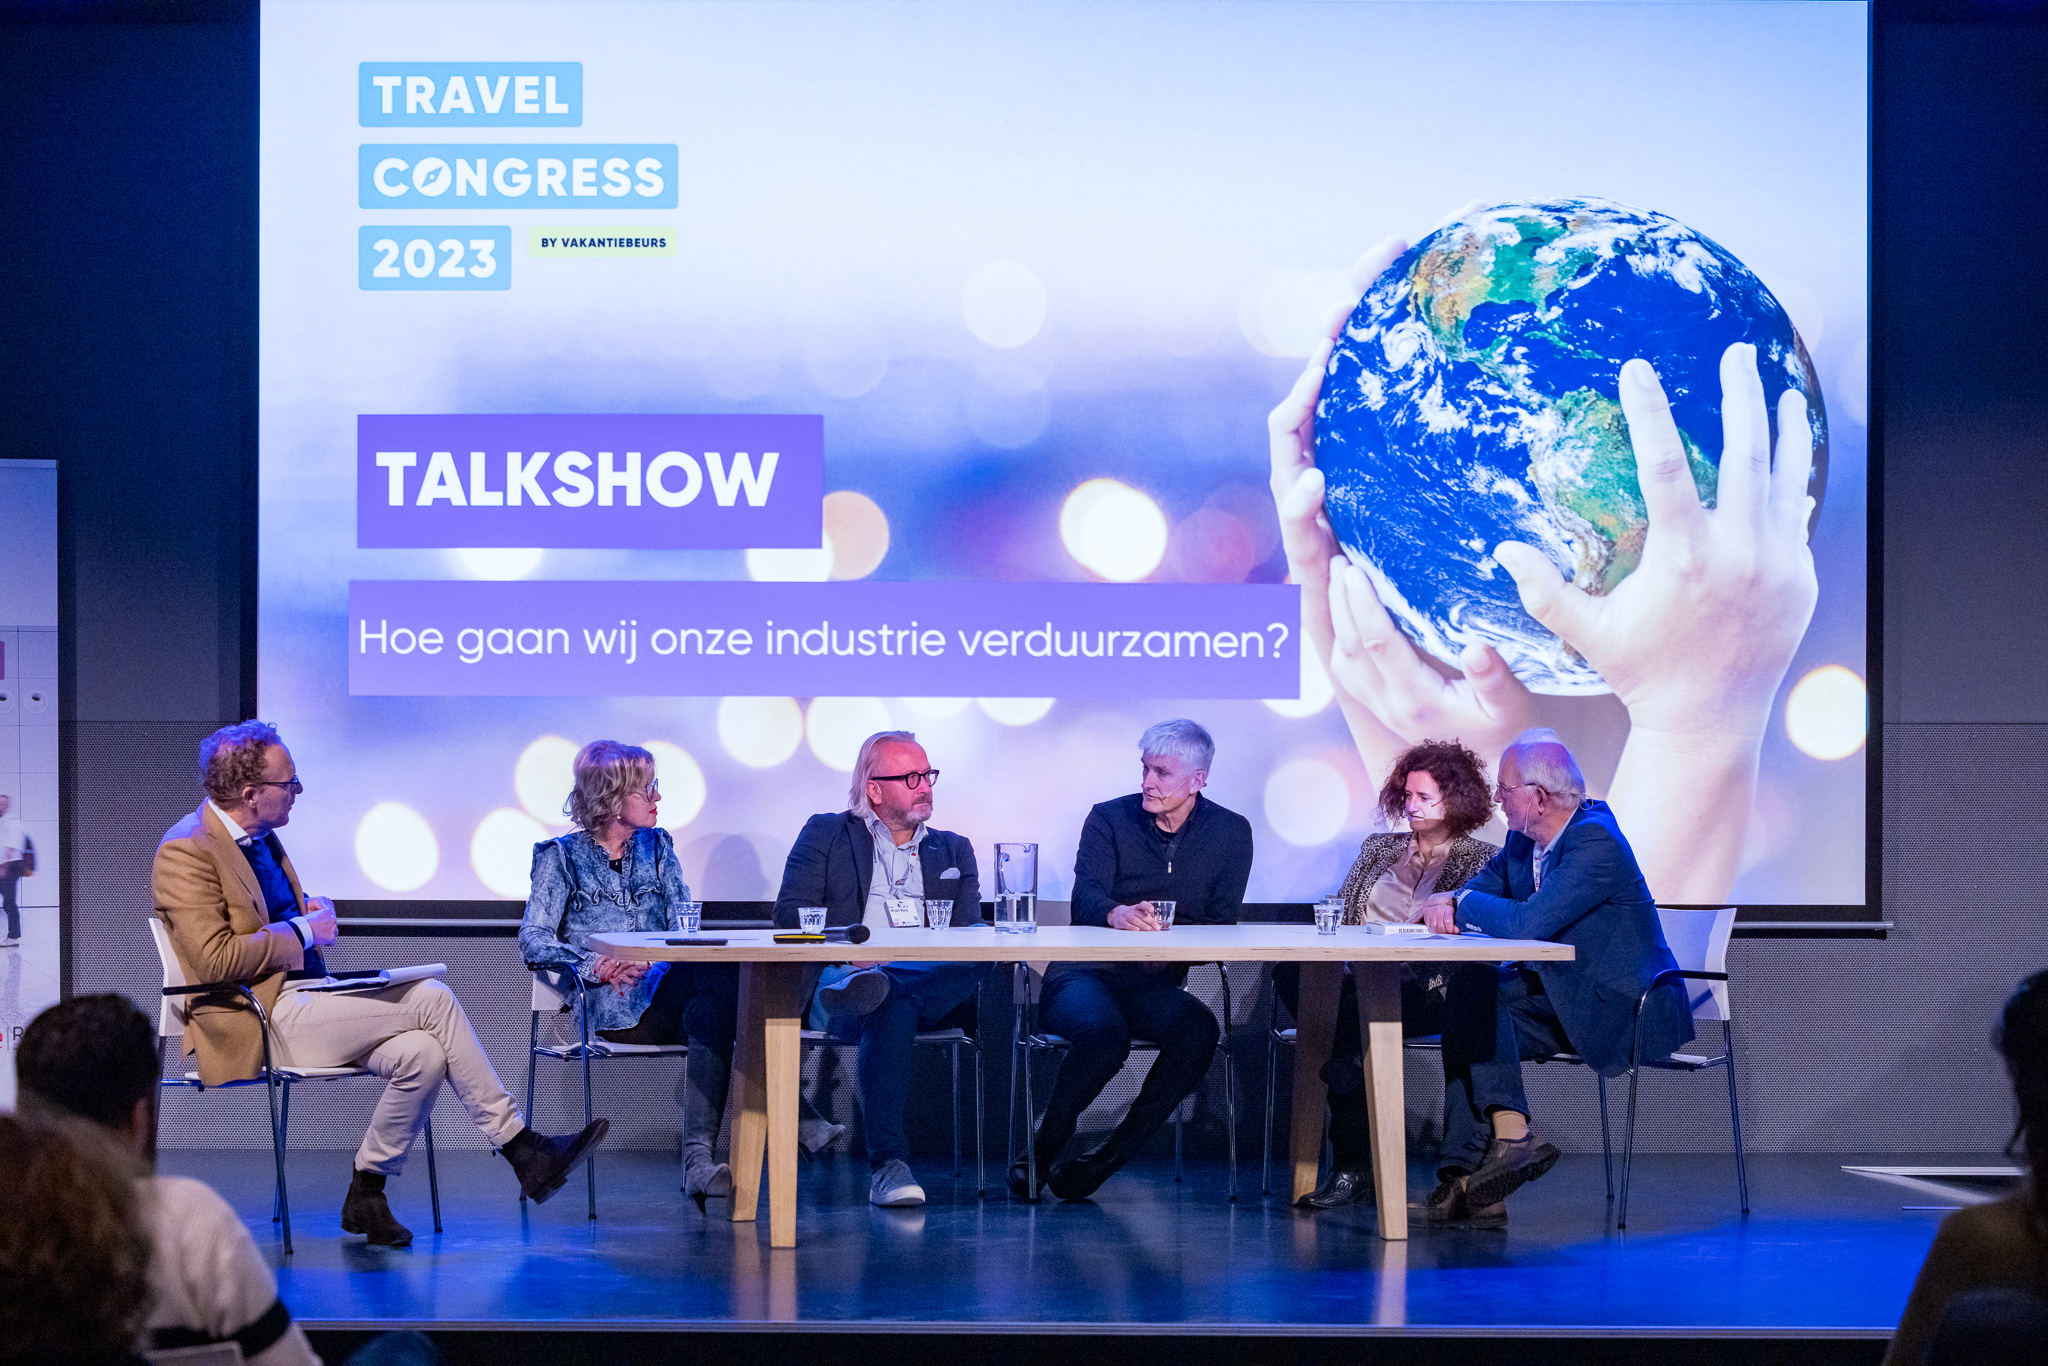 Travel-Congress-2023-podium-met-panel